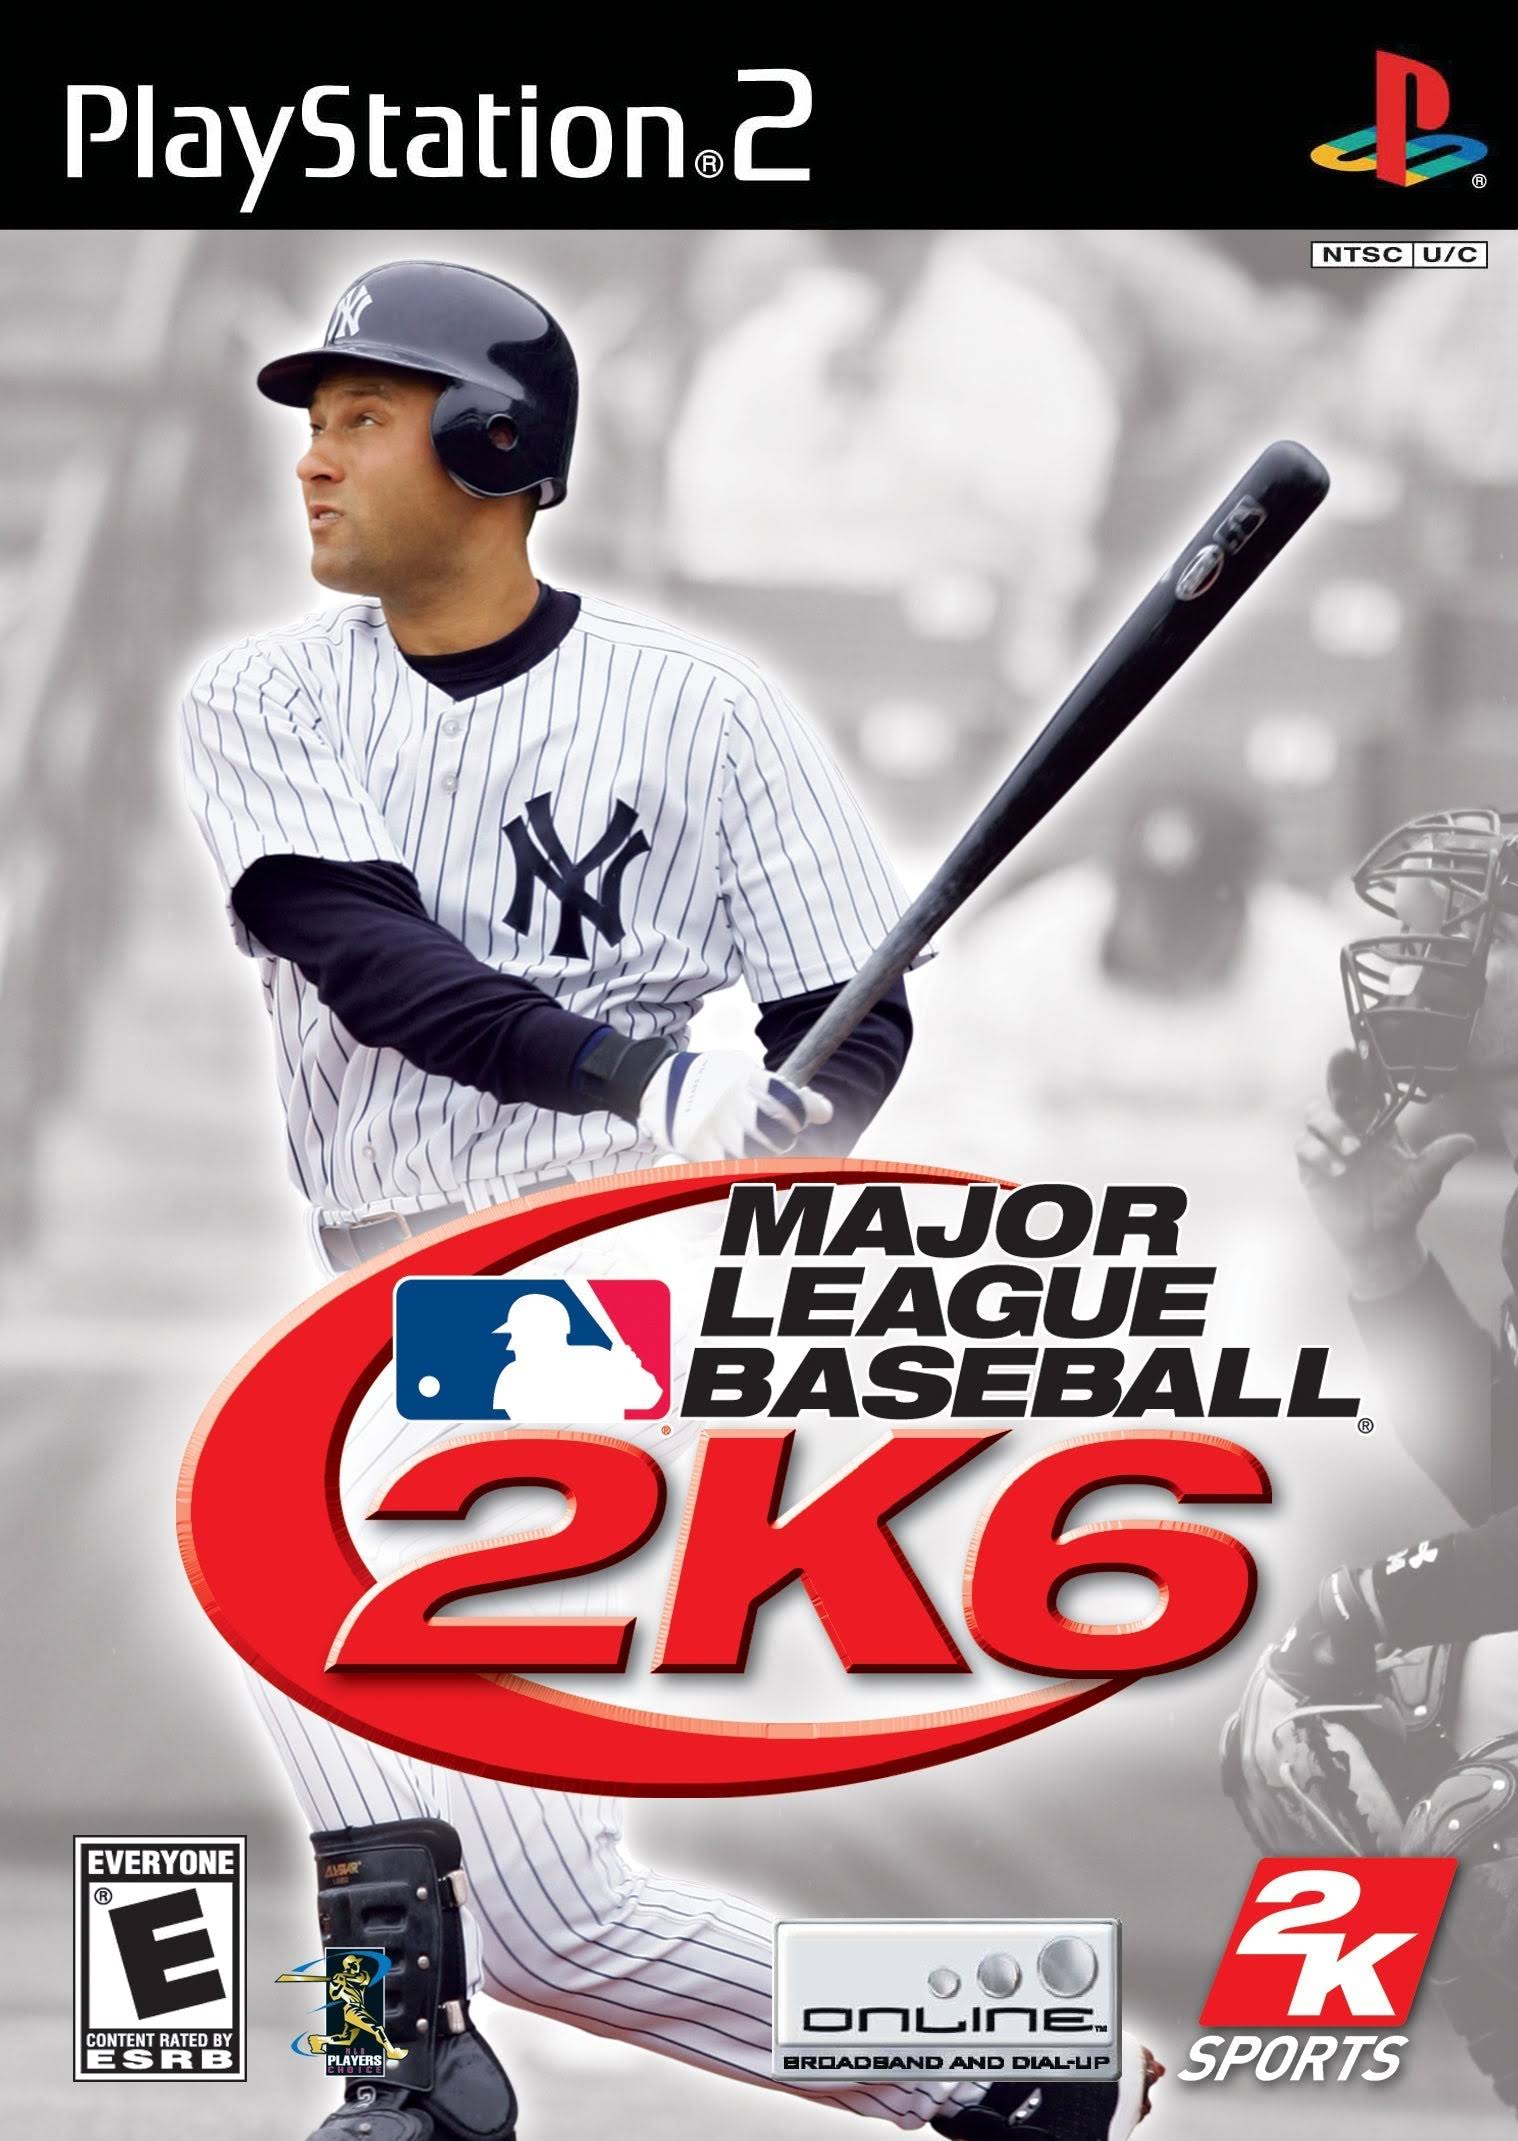 Major League Baseball 2k6 - PlayStation 2